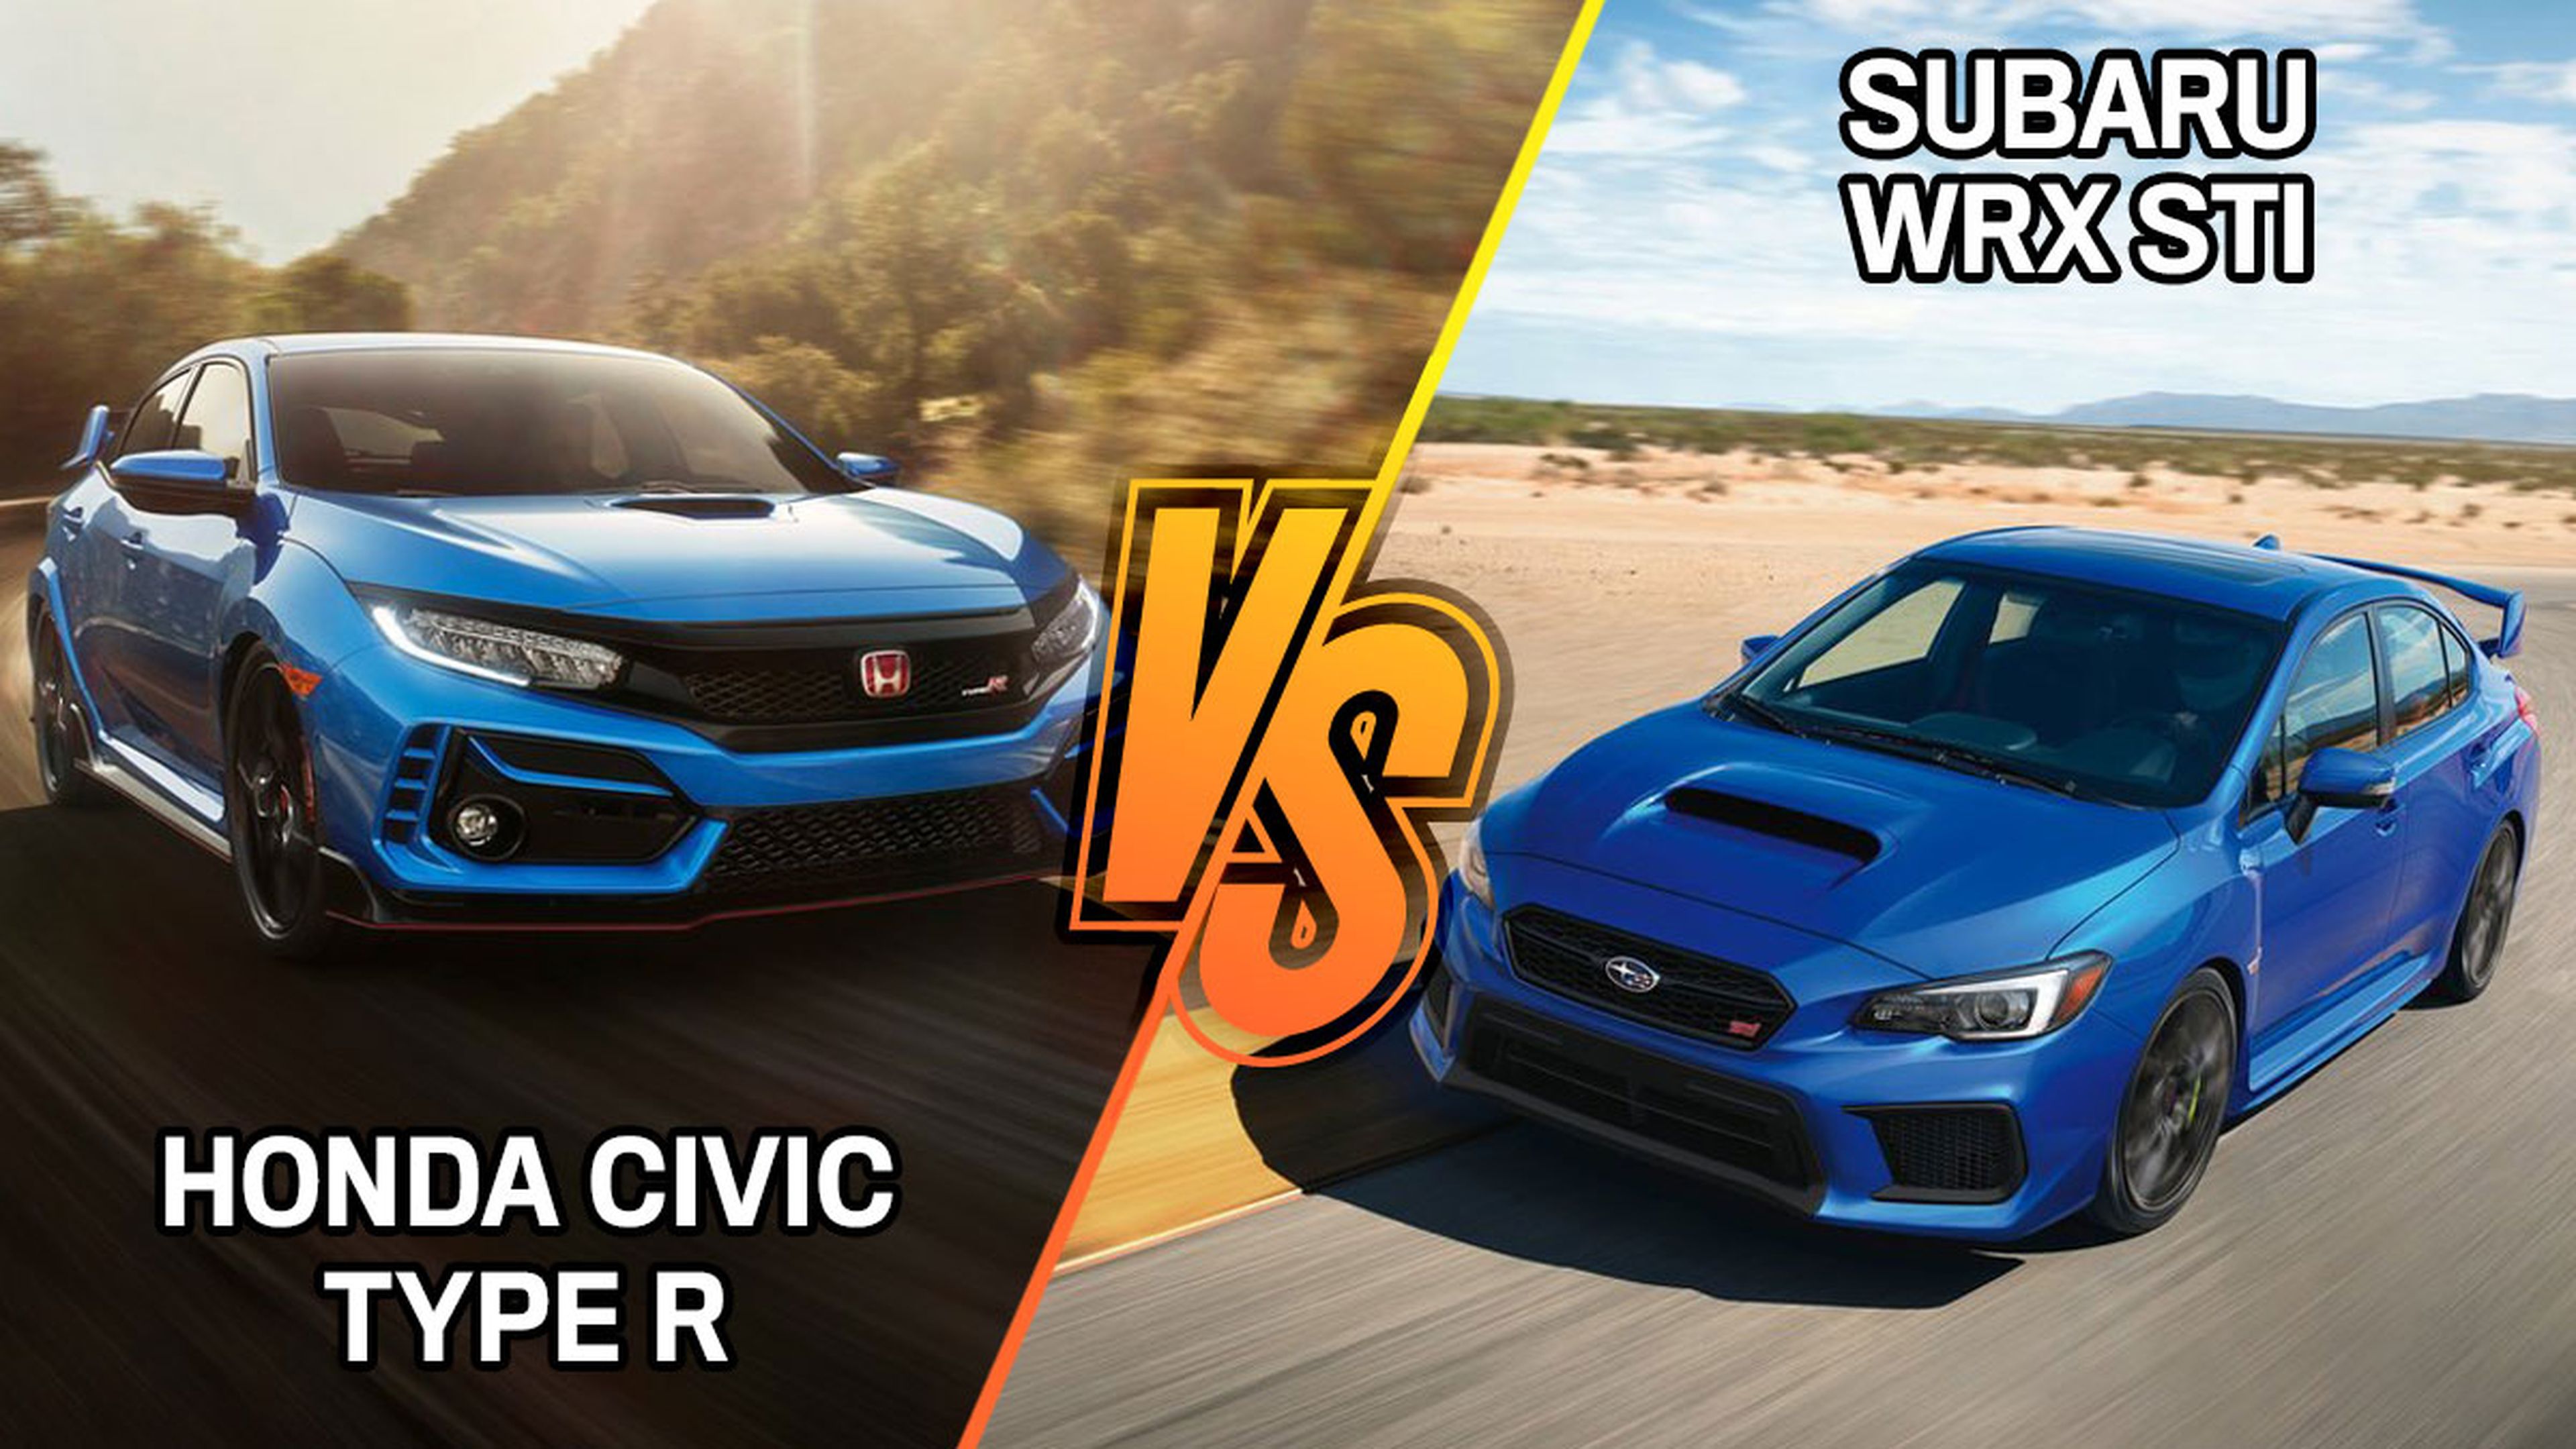 Honda Civic Type R vs Subaru WRX STI